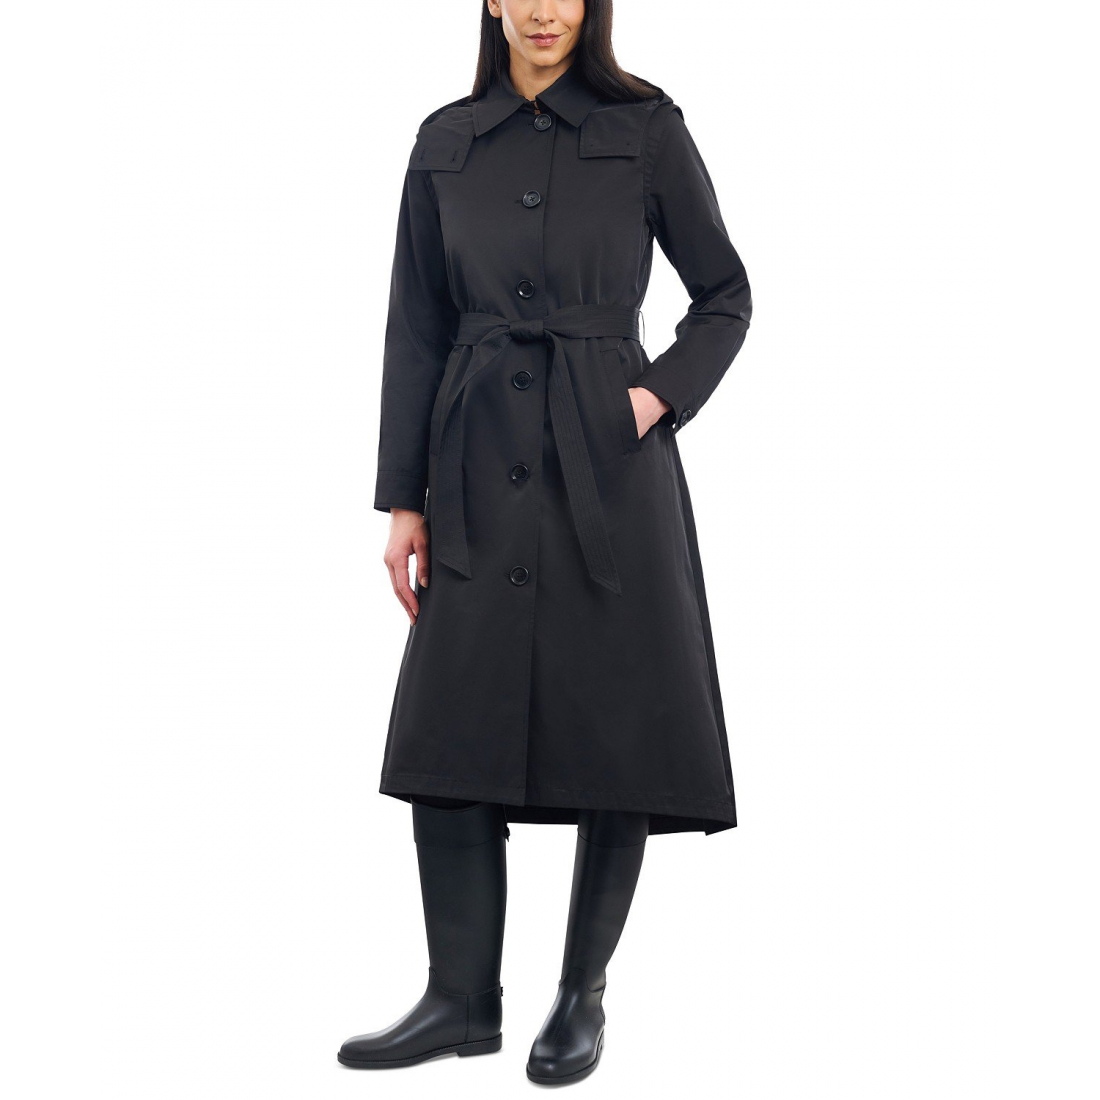 Women's 'Hooded Belted' Raincoat